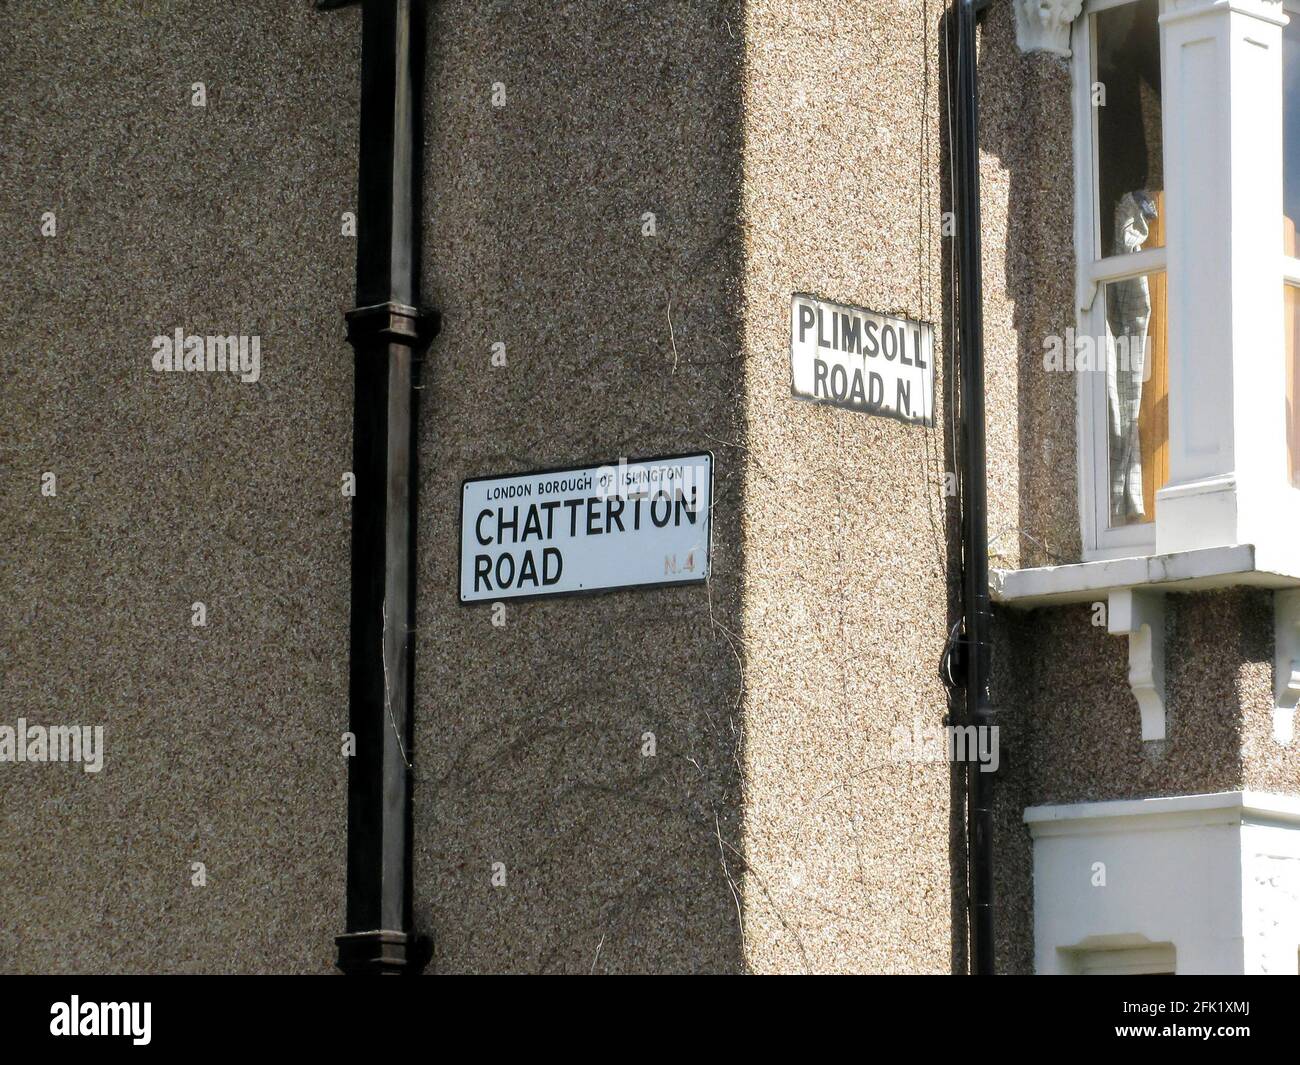 Straßenschilder für Chatterton Road und Plimsoll Road, Highbury, London Borough of Islington, London N4, UK ab 2012 Stockfoto